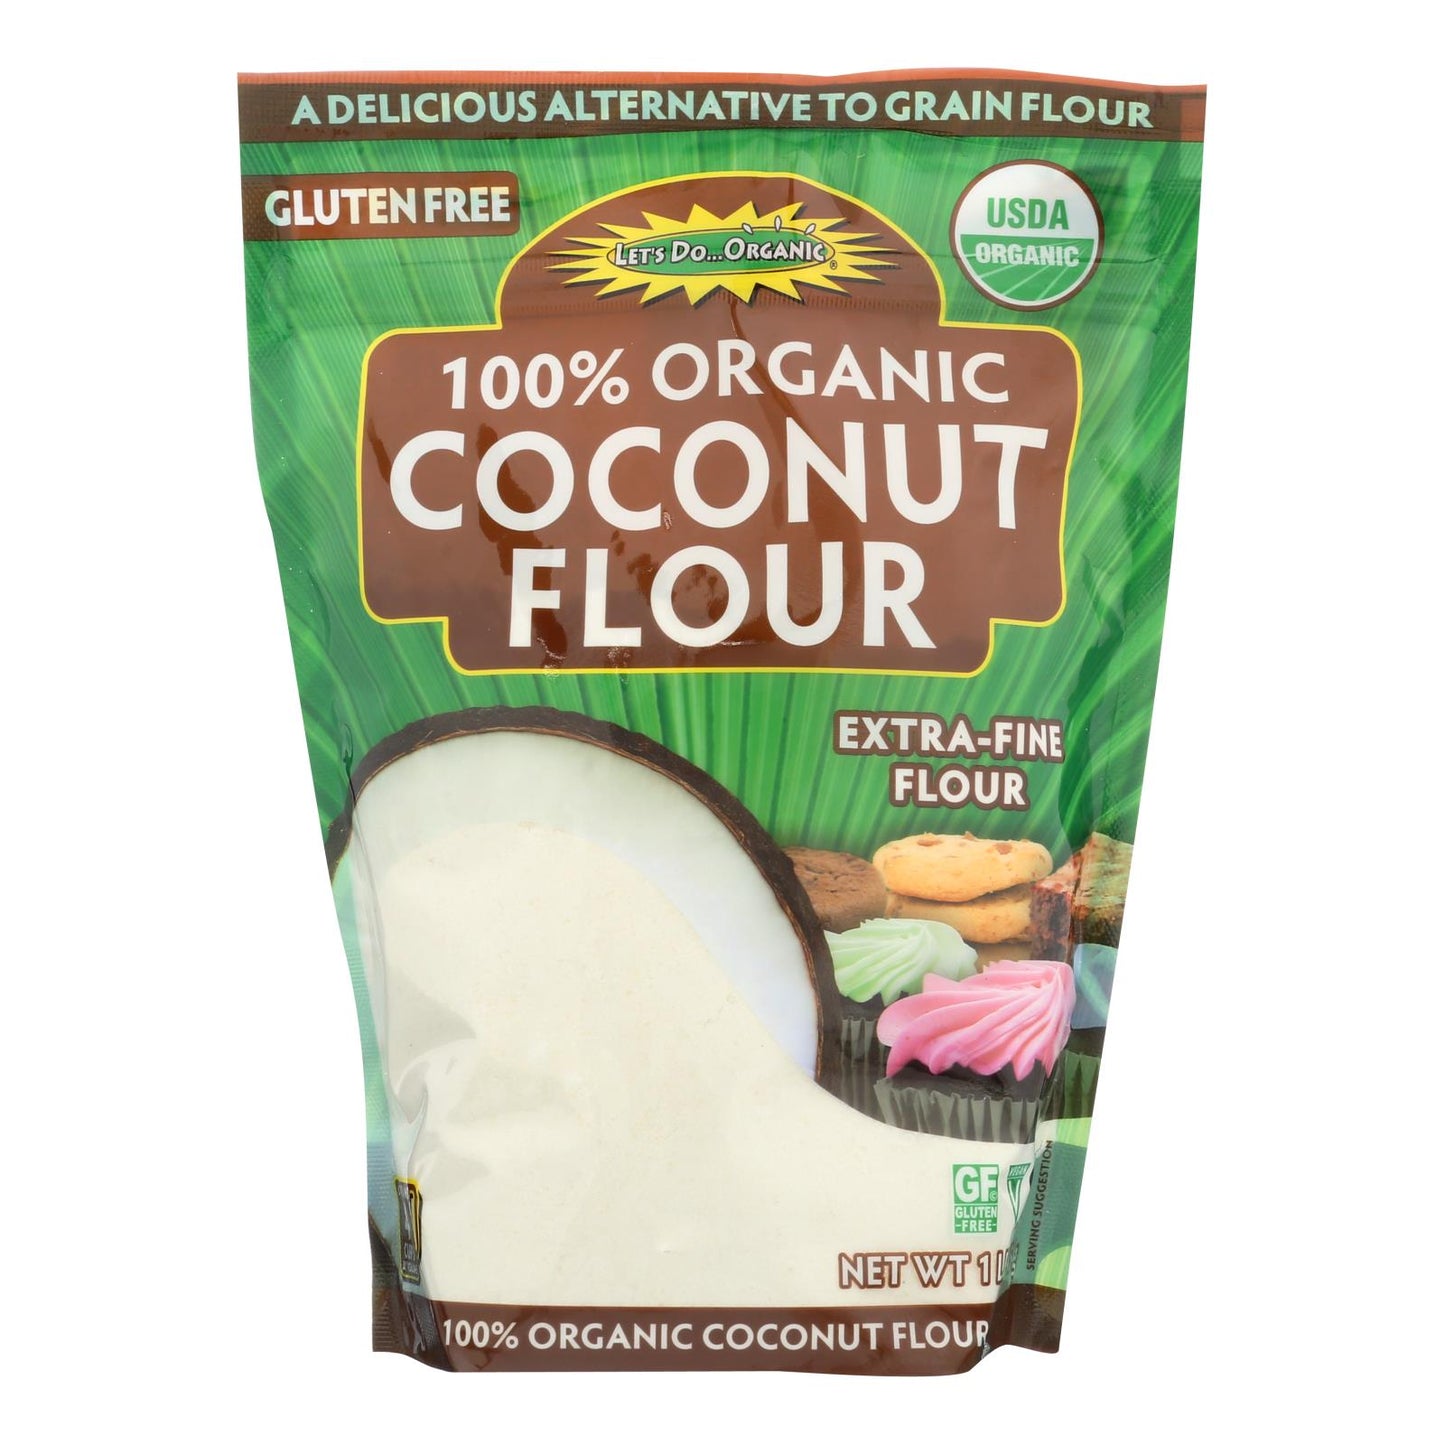 Let's Do Organics Organic Flour - Coconut - Case Of 6 - 16 Oz.